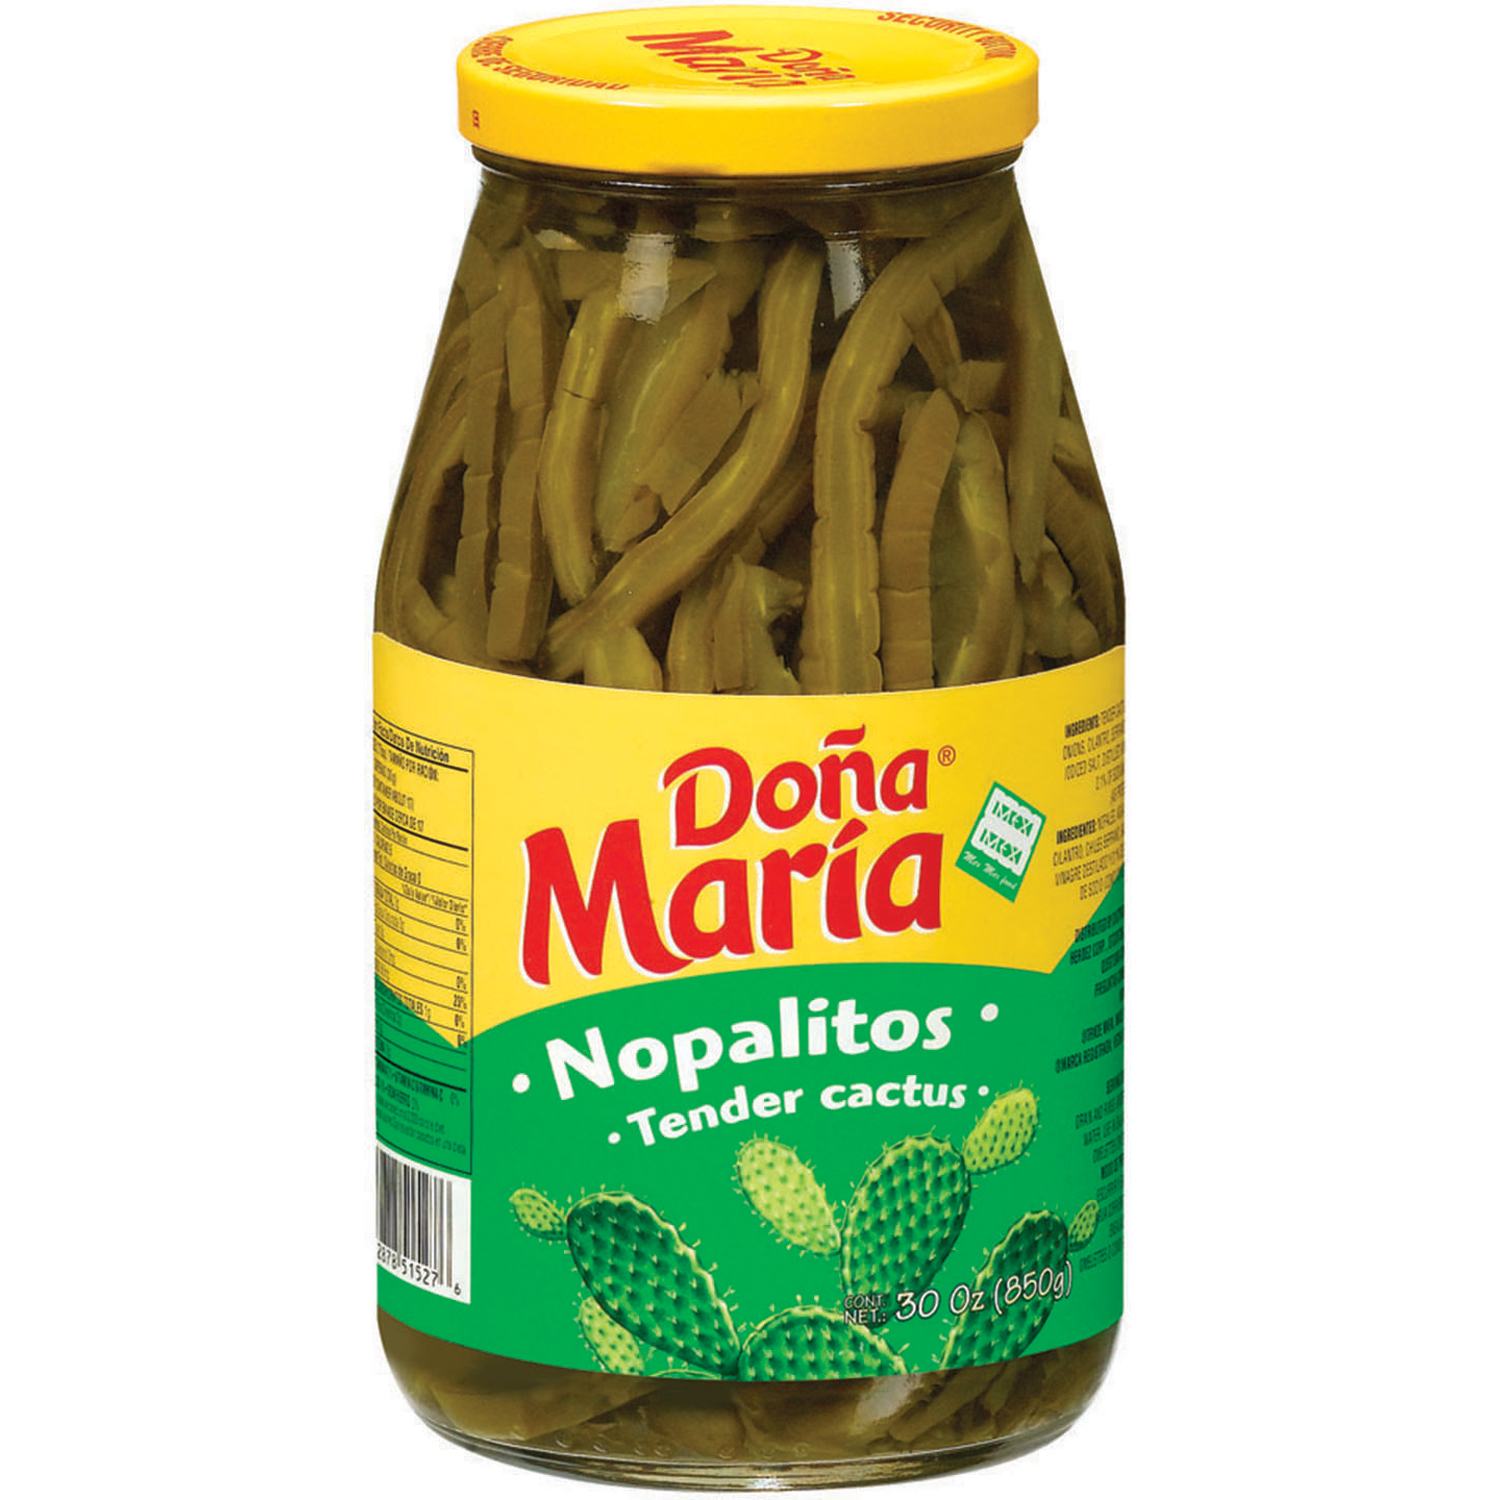 Dona Maria Nopalitos Tender Cactus 30 oz